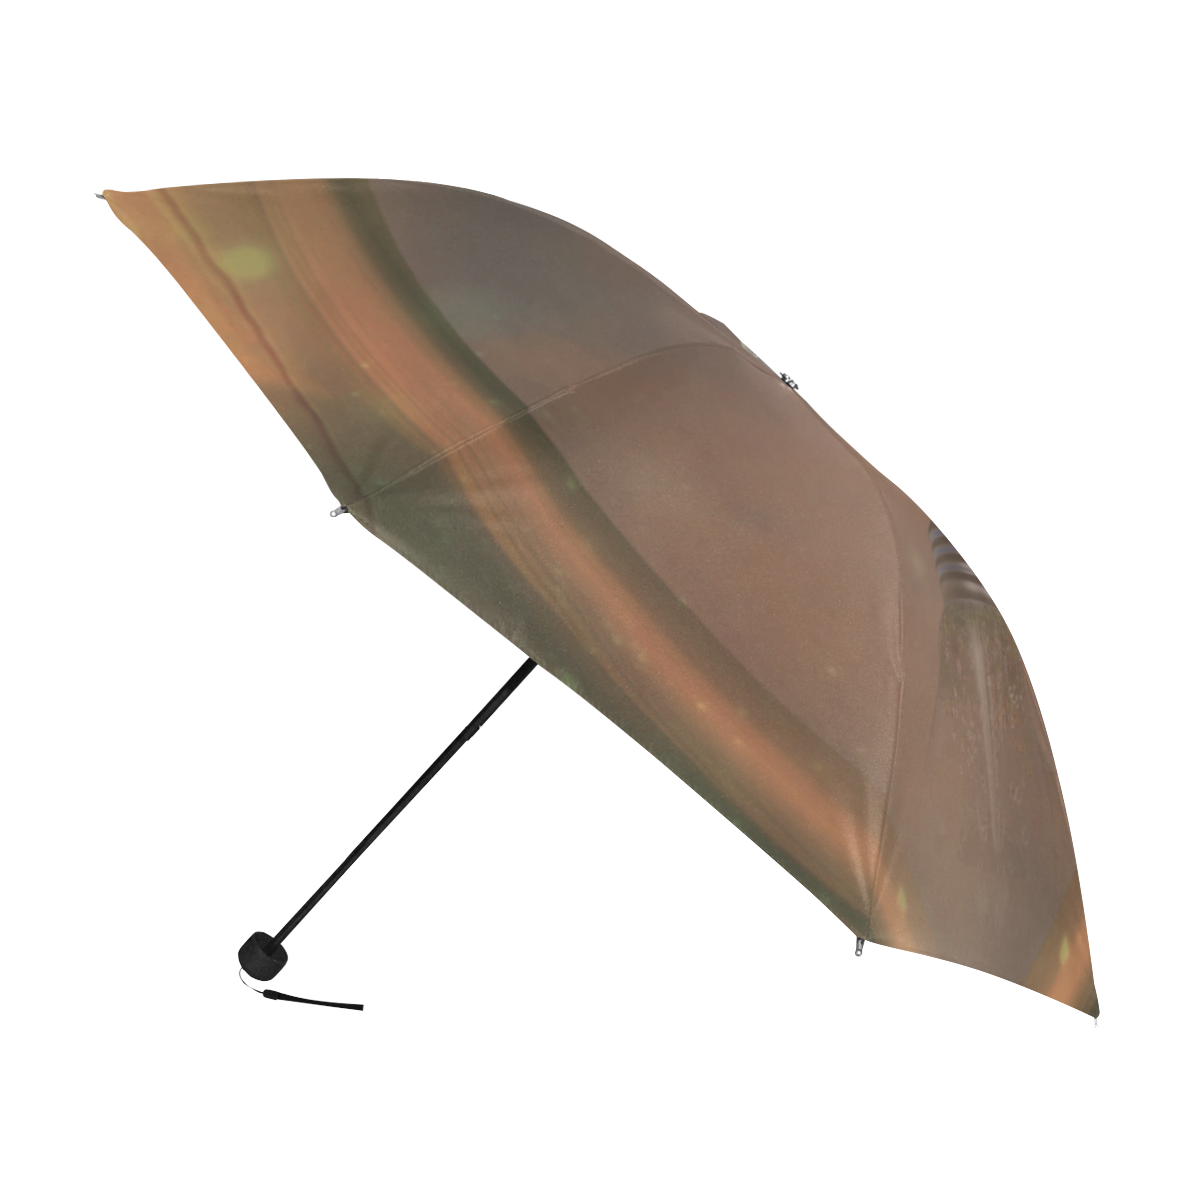 Light bulb with birds Anti-UV Foldable Umbrella (U08)